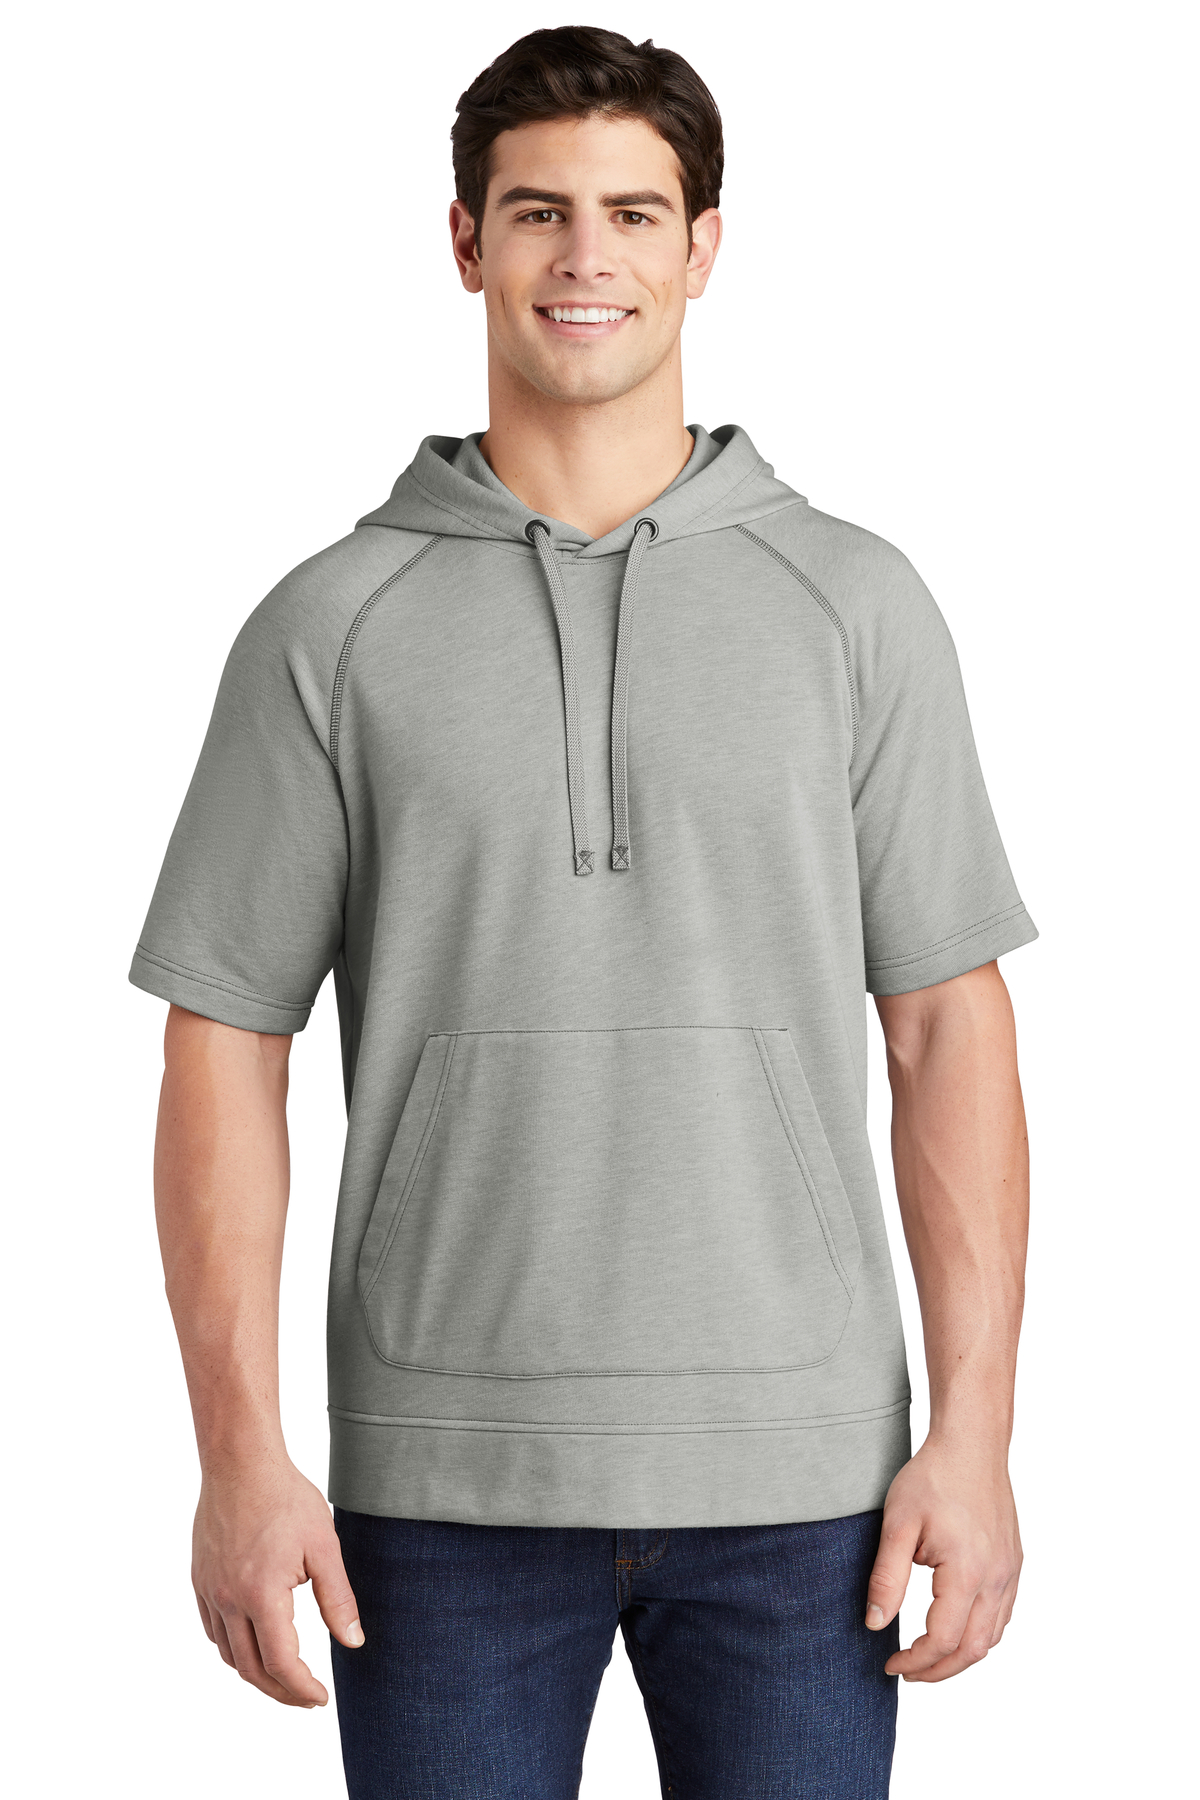 Sport-Tek Embroidered Men's Tri-Blend Short Sleeve Hoodie | Sweatshirts ...